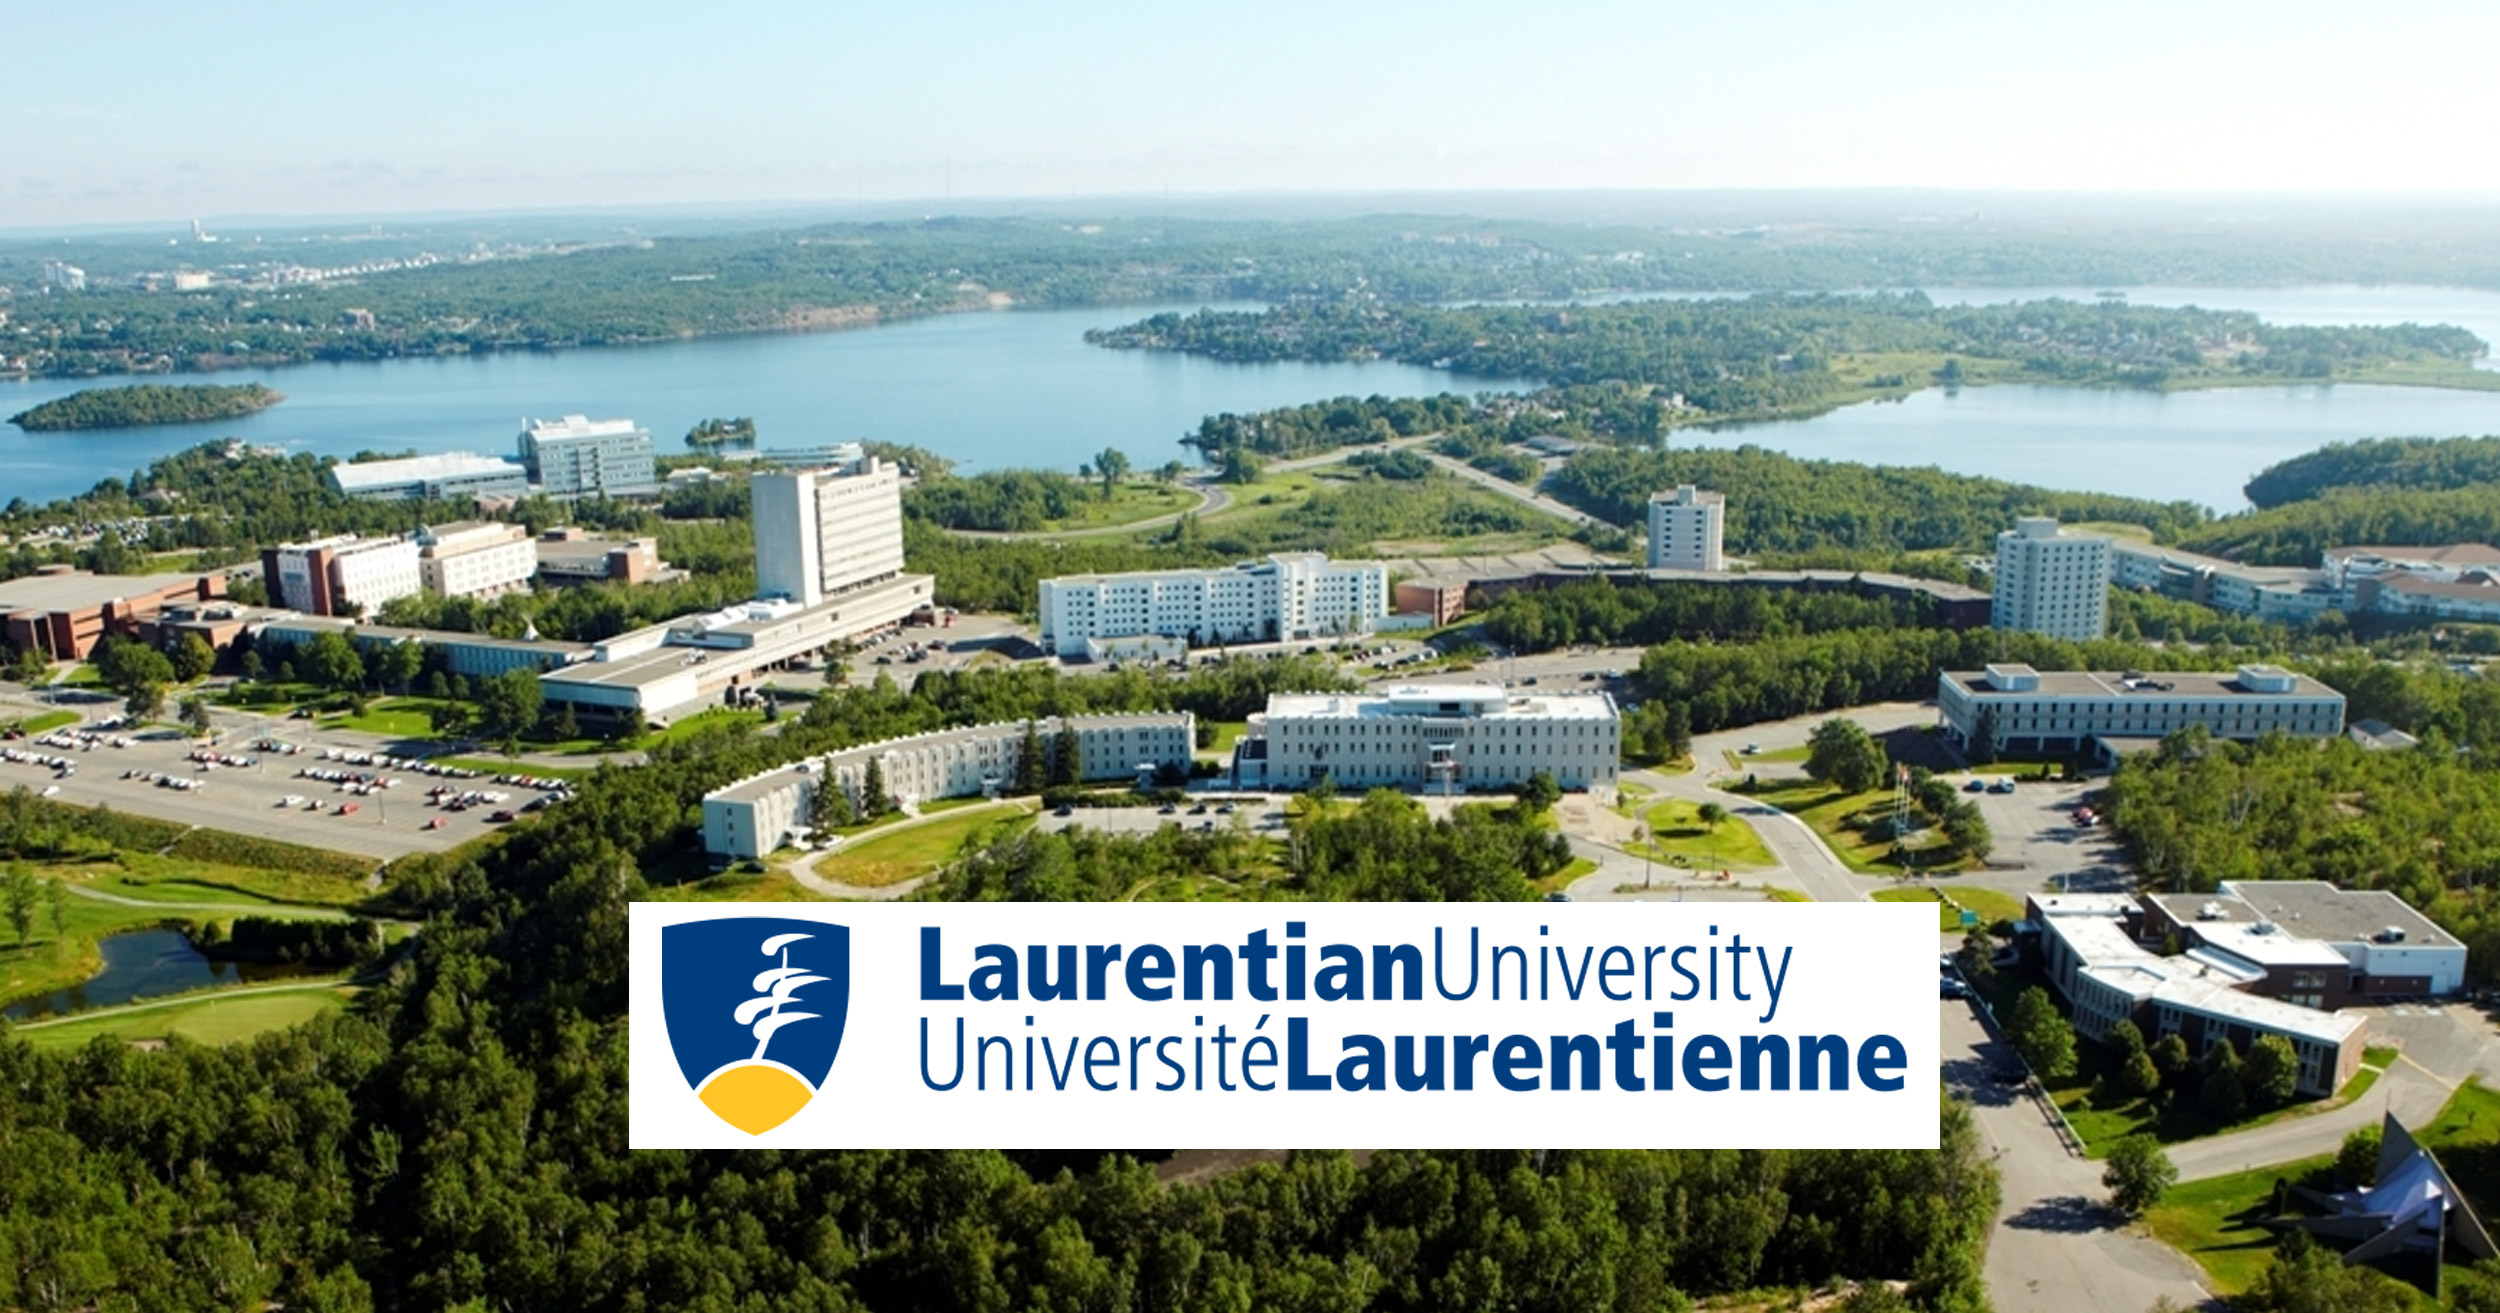 * Laurentian University IStudentz